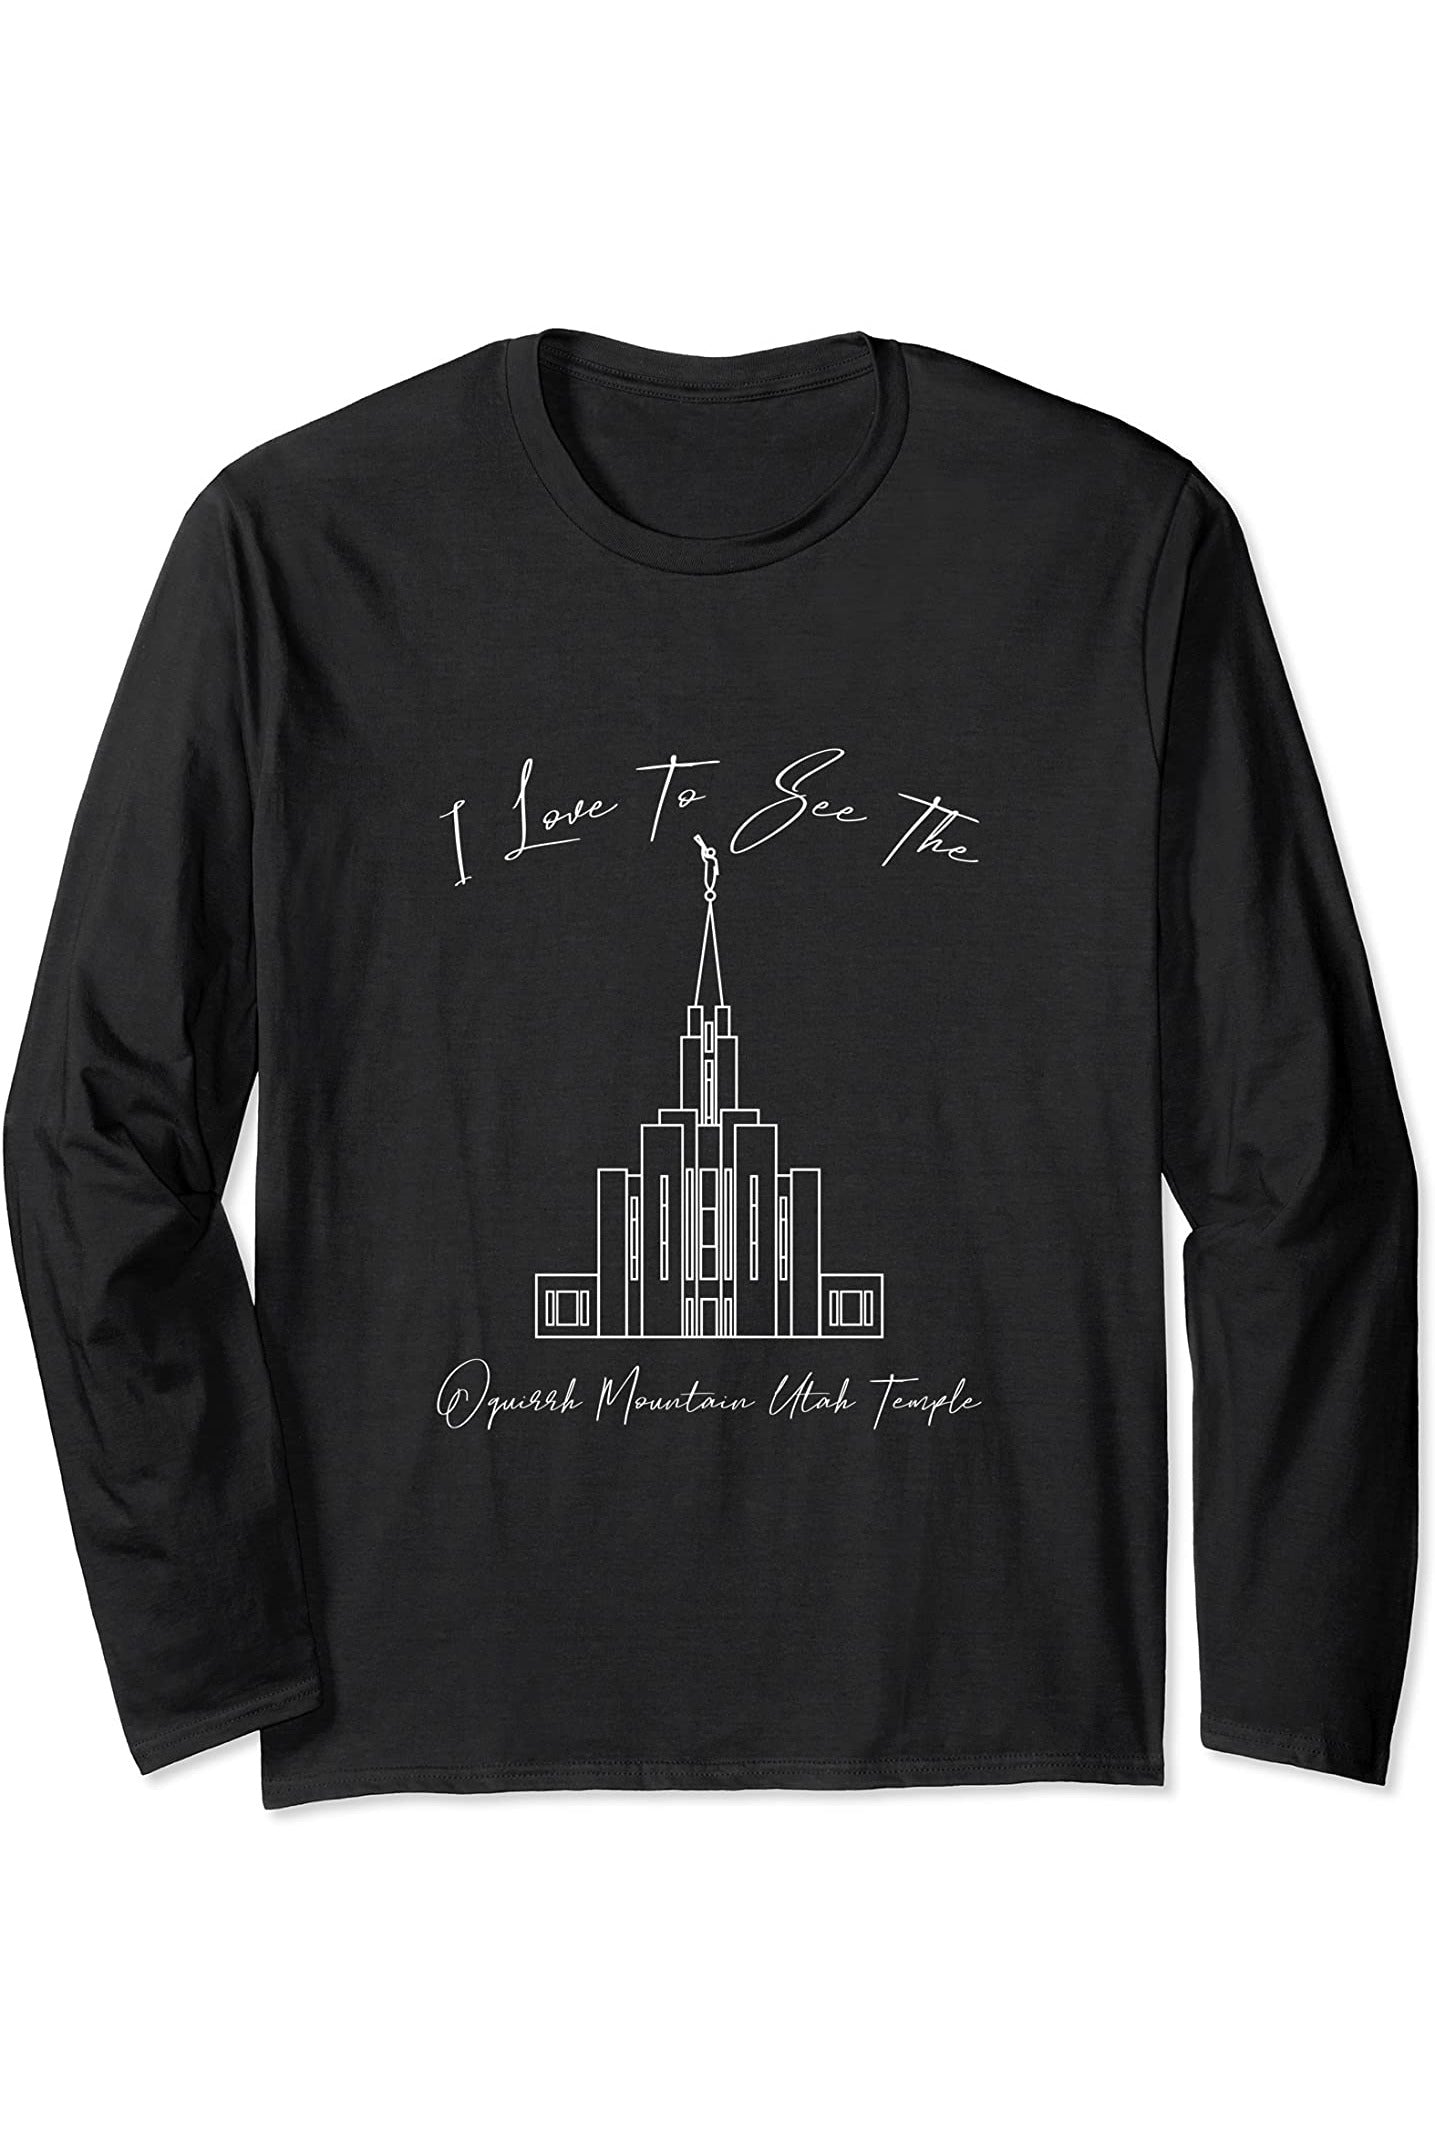 Oquirrh Mountain Utah Temple Long Sleeve T-Shirt - Calligraphy Style (English) US